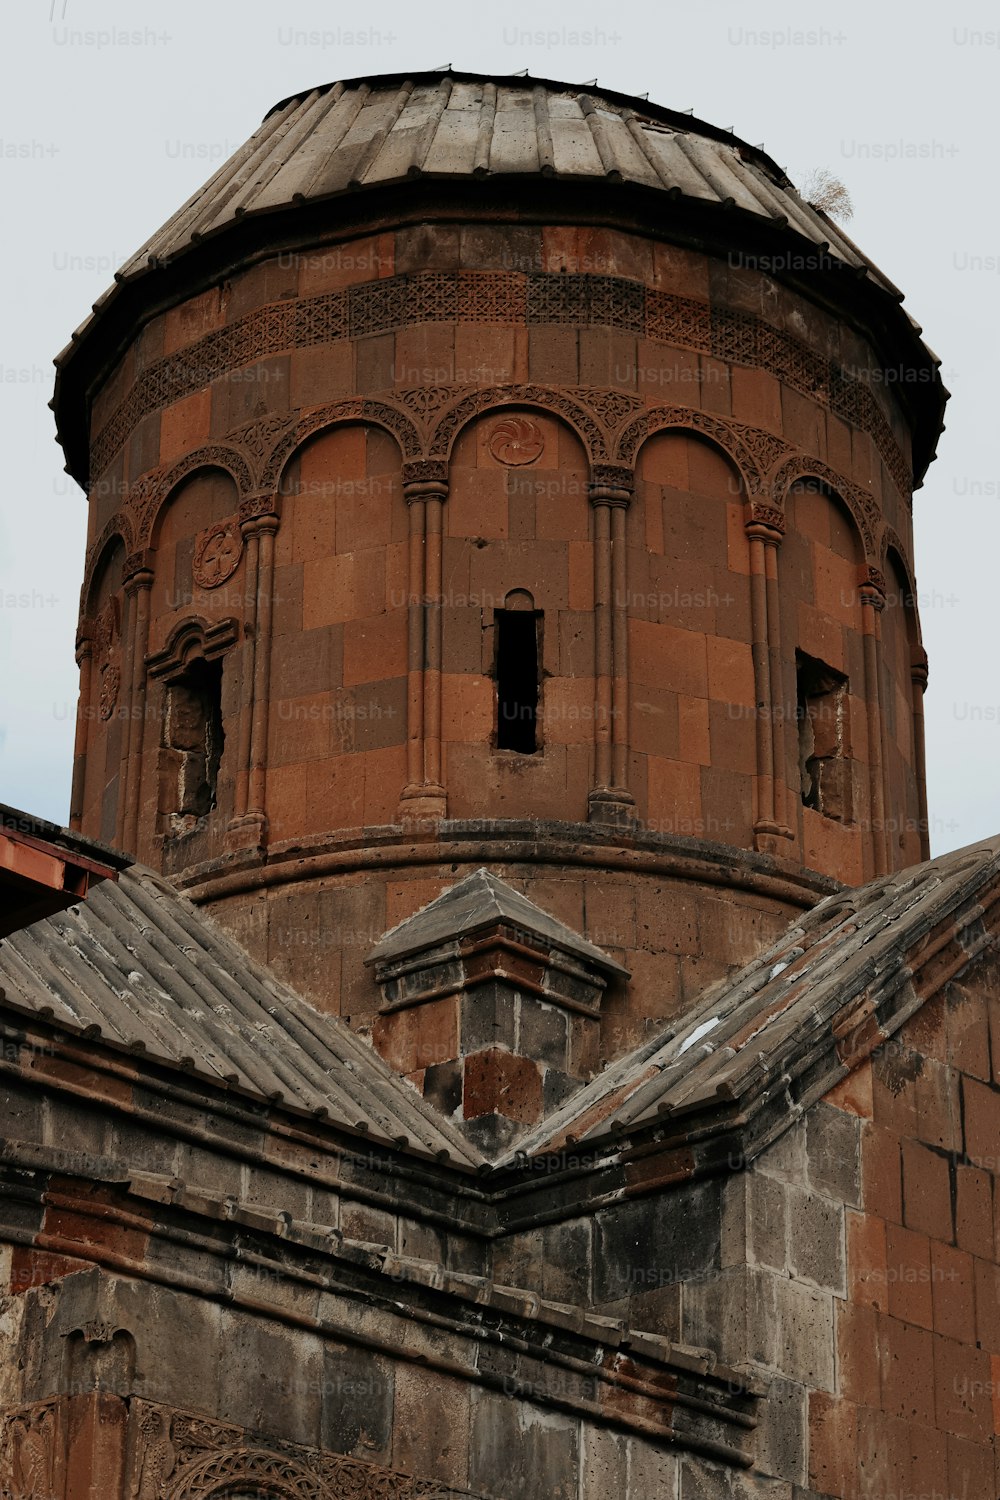 Un antiguo edificio de ladrillo con una torre del reloj